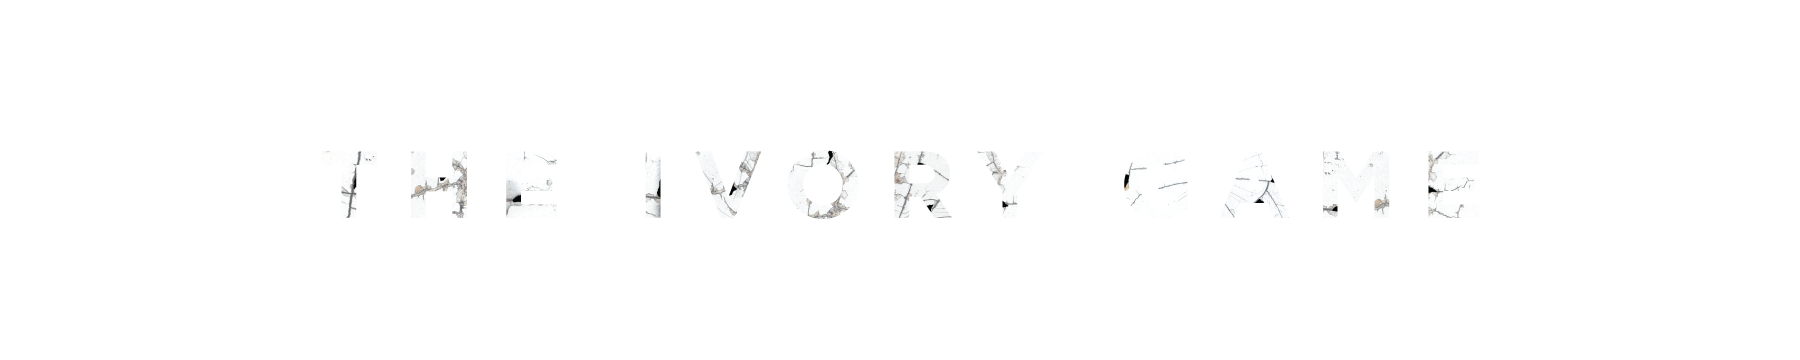 The Ivory Game lockup